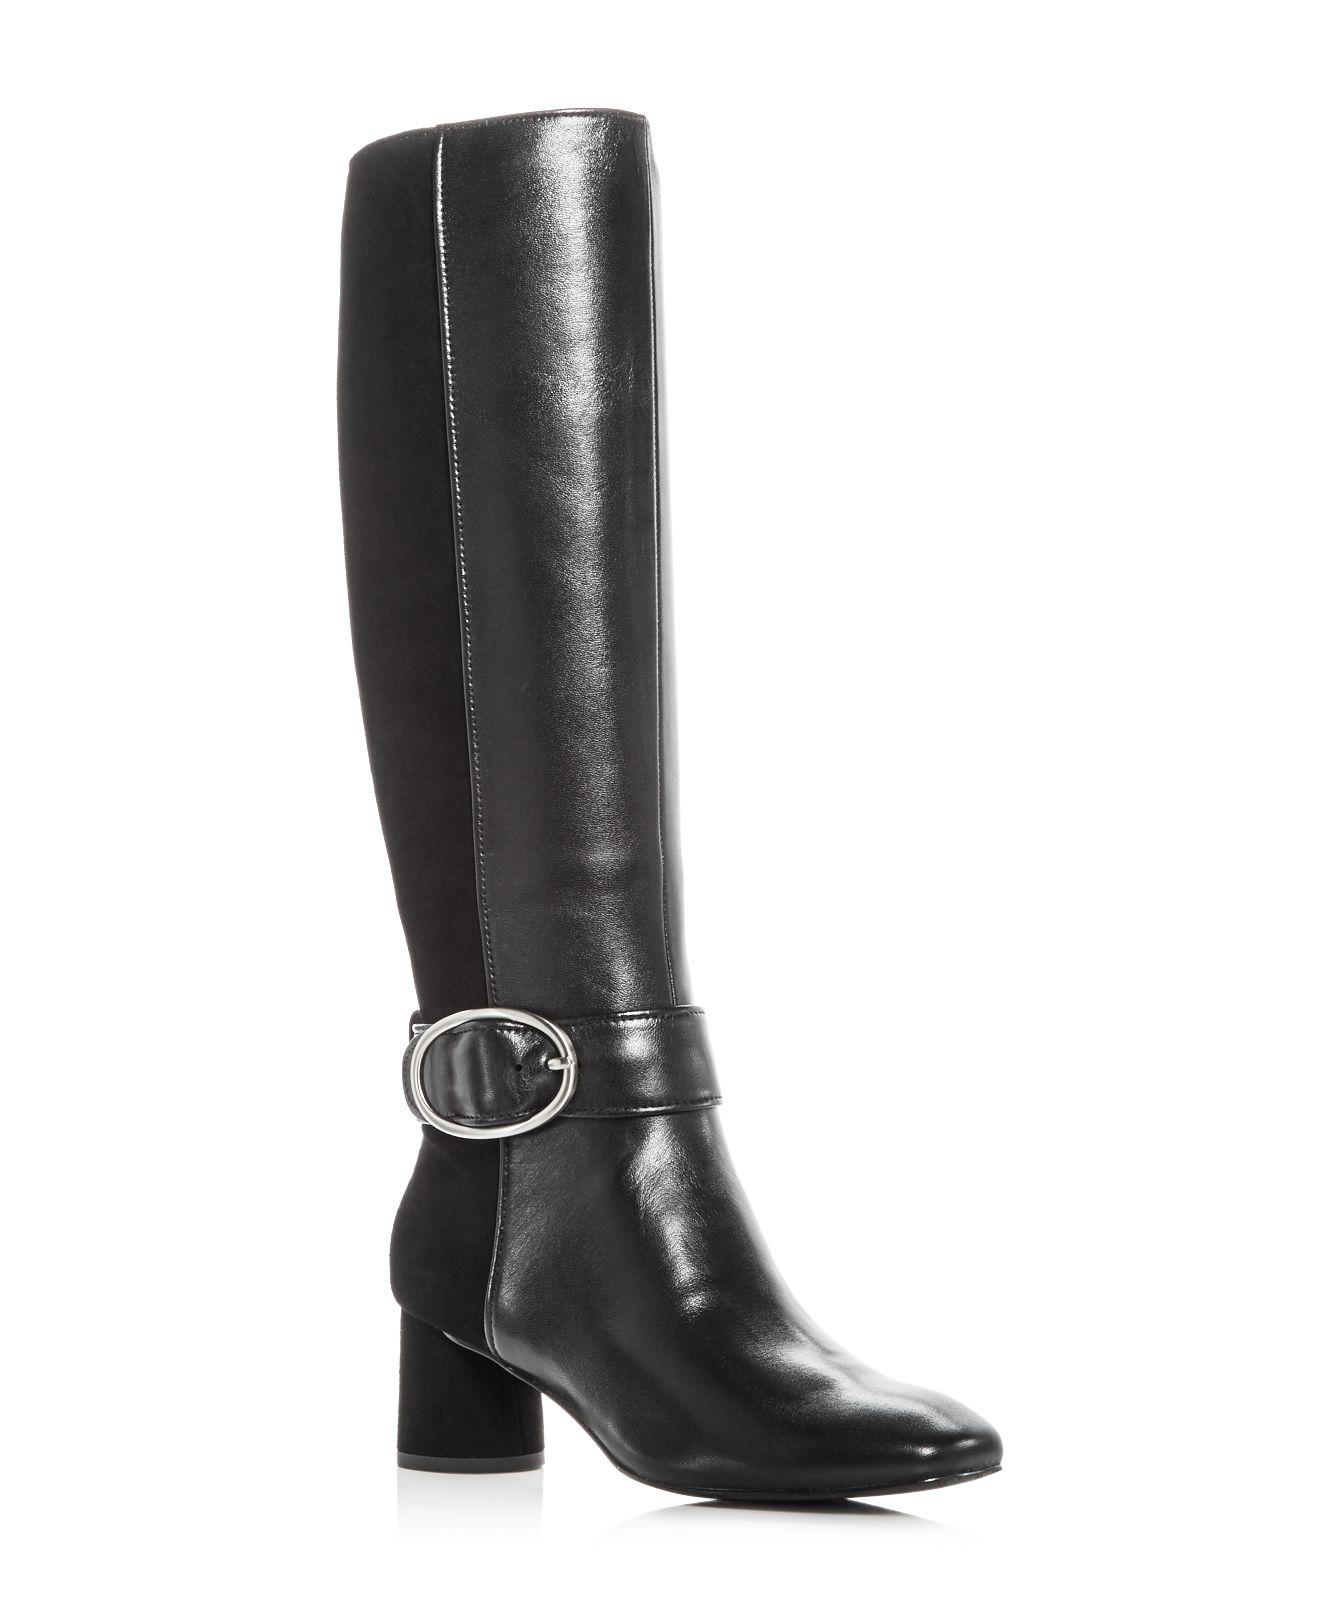 Lyst - Donald J Pliner Women's Caye Leather & Suede High Heel Boots in ...